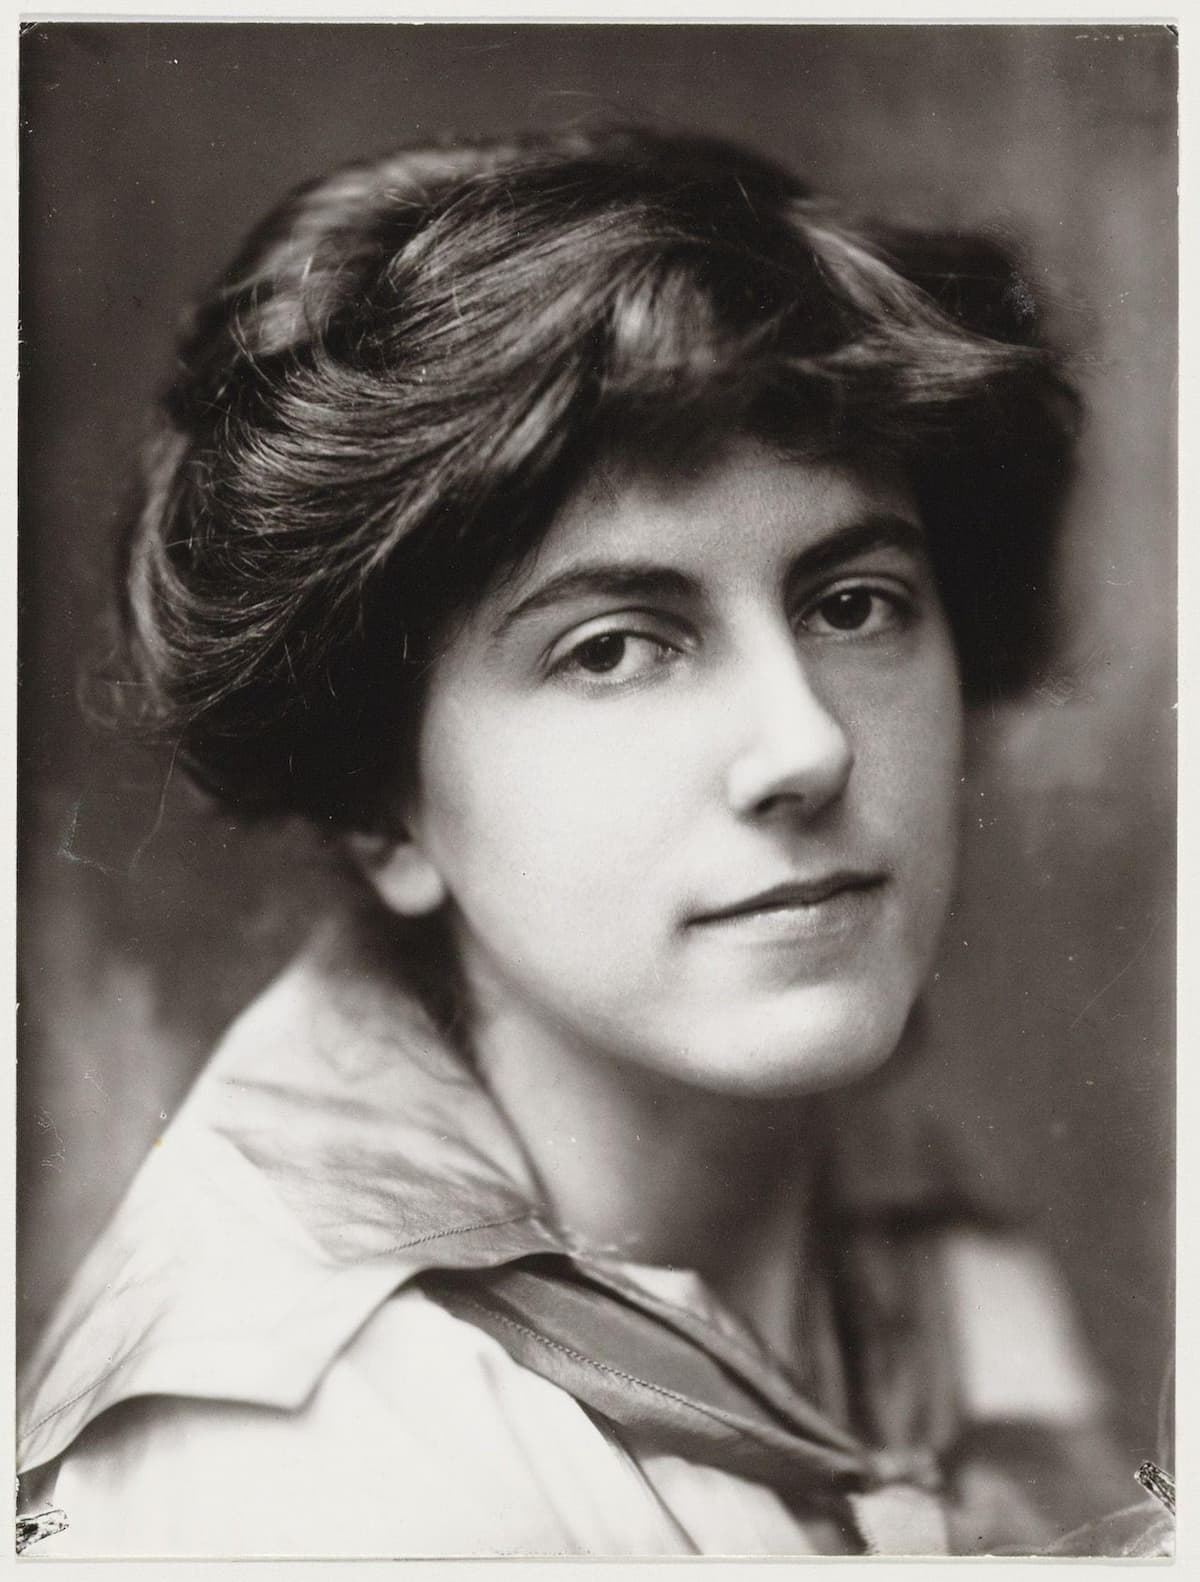 Photo of Henriëtte Bosmans by Jacob Merkelbach, 1917